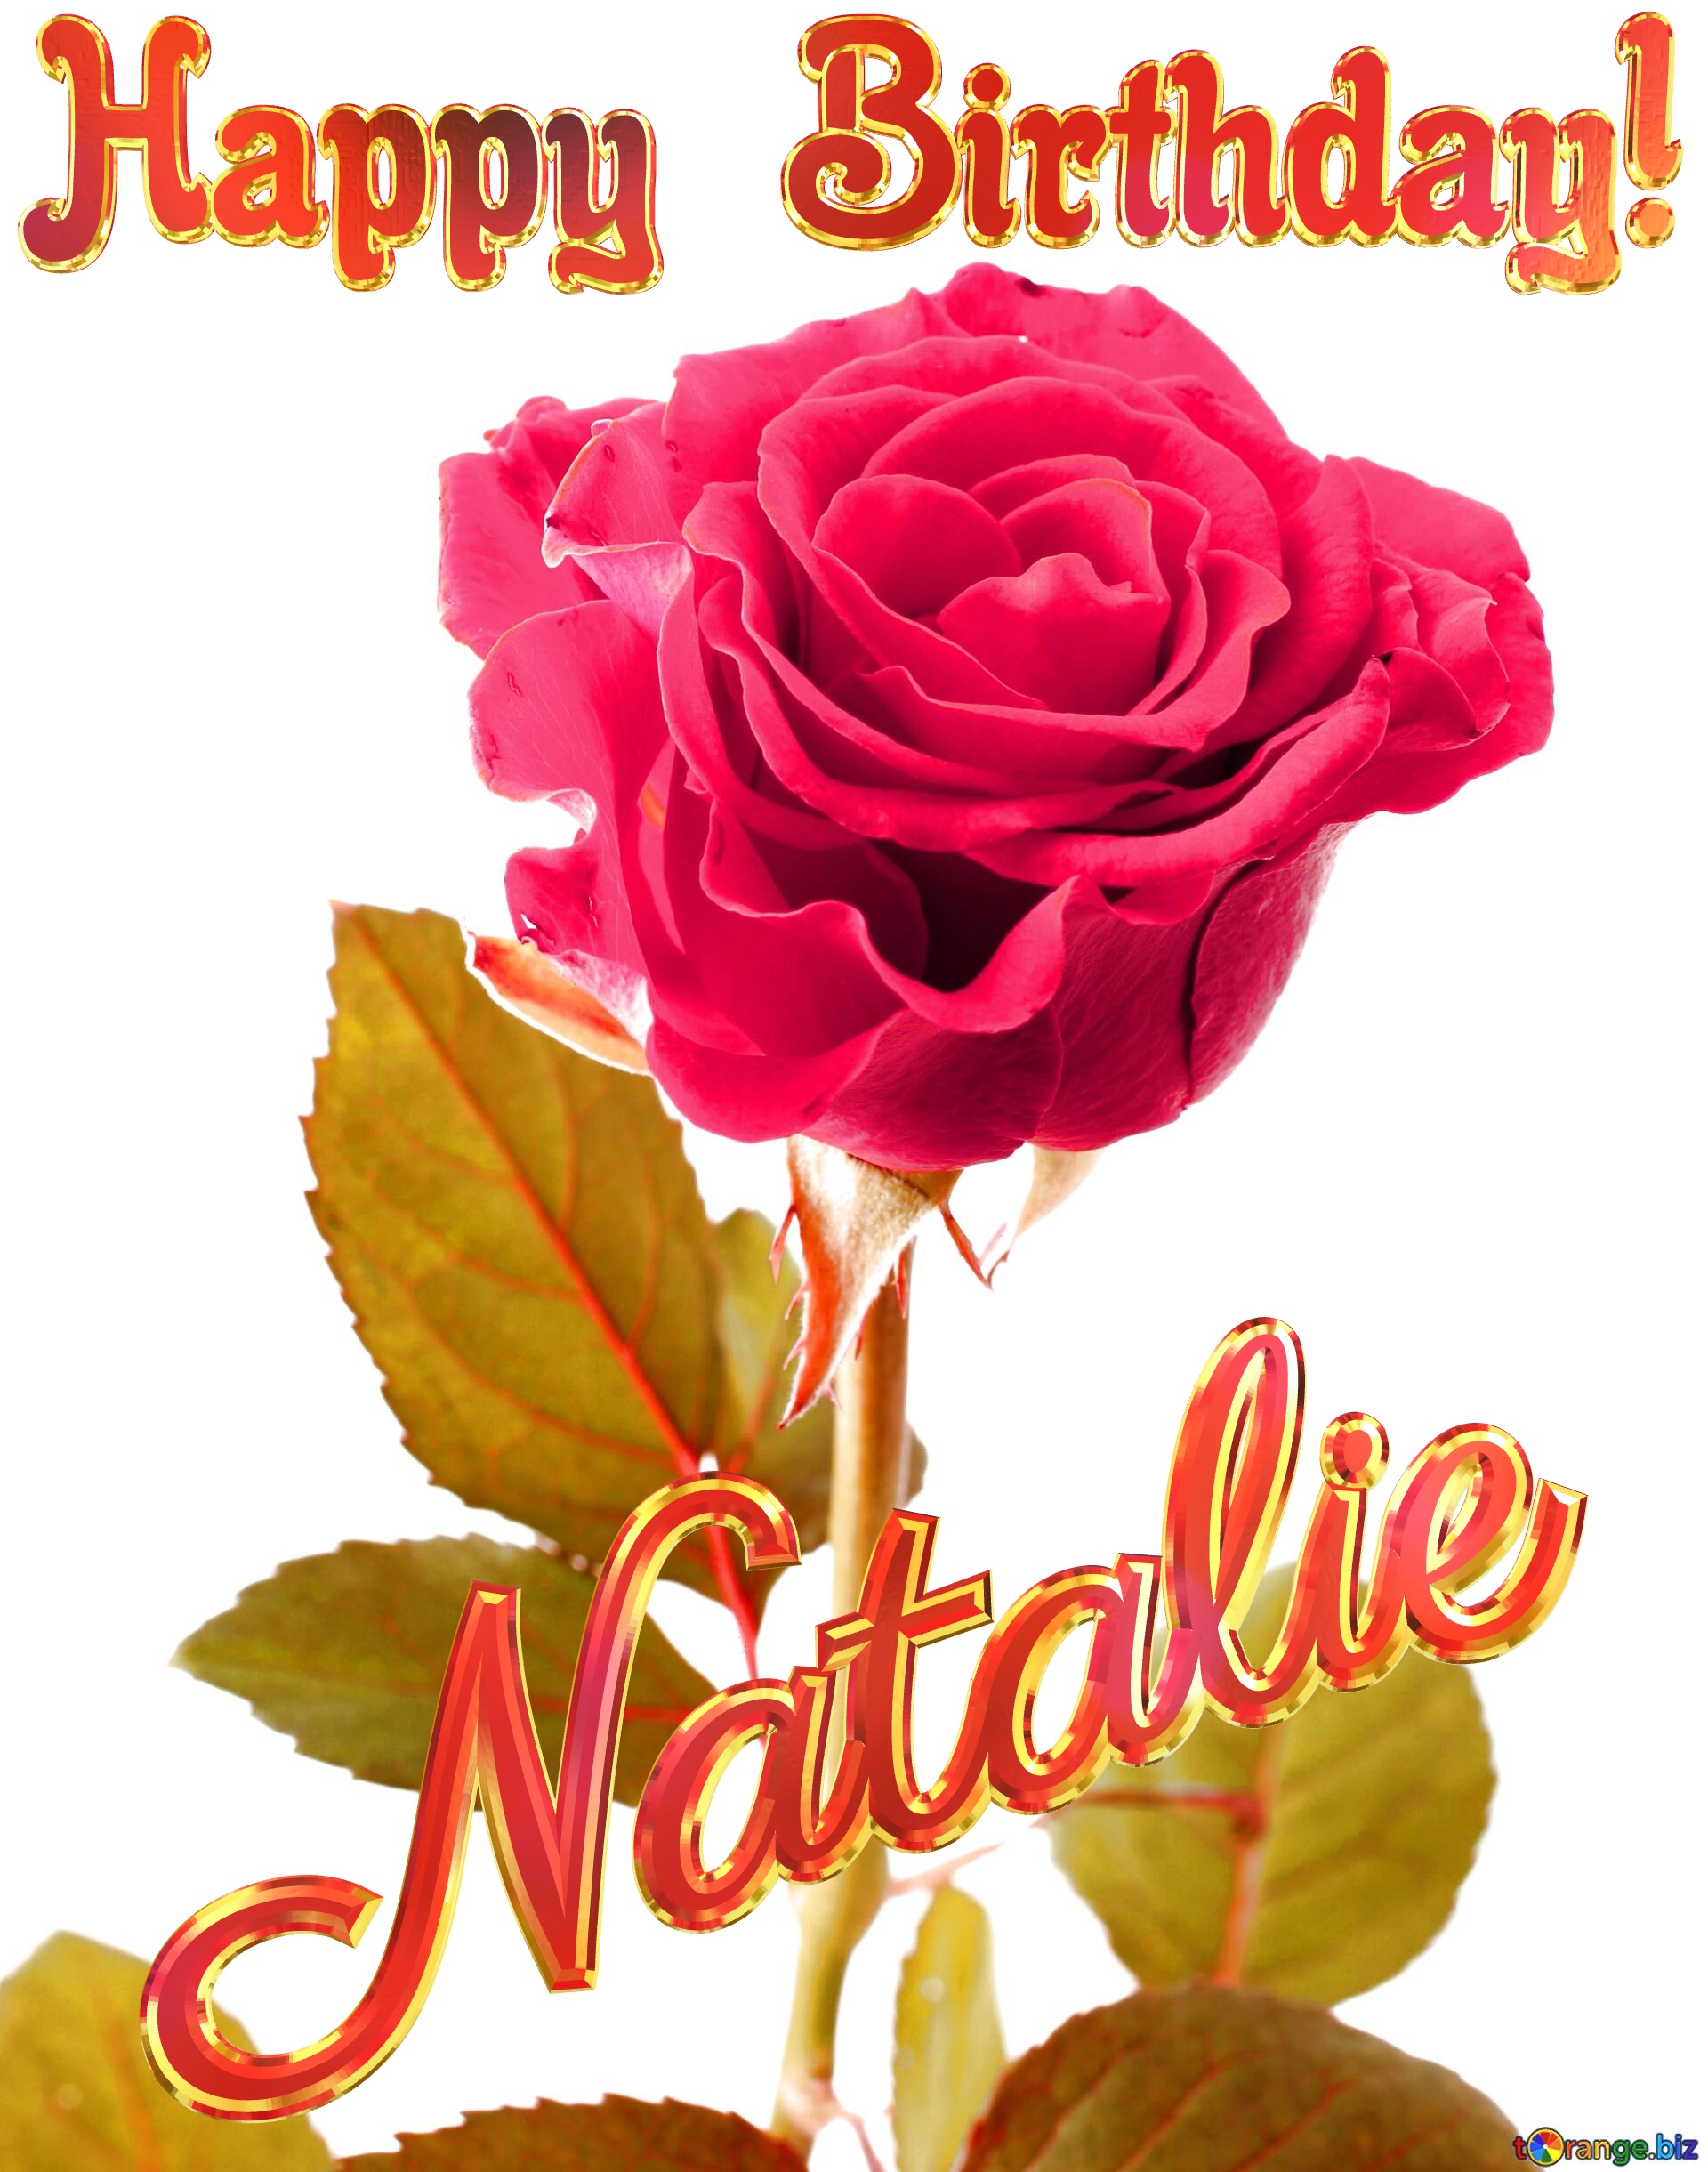 Natalie Happy Birthday! Pastel colors. Beautiful rose. №0